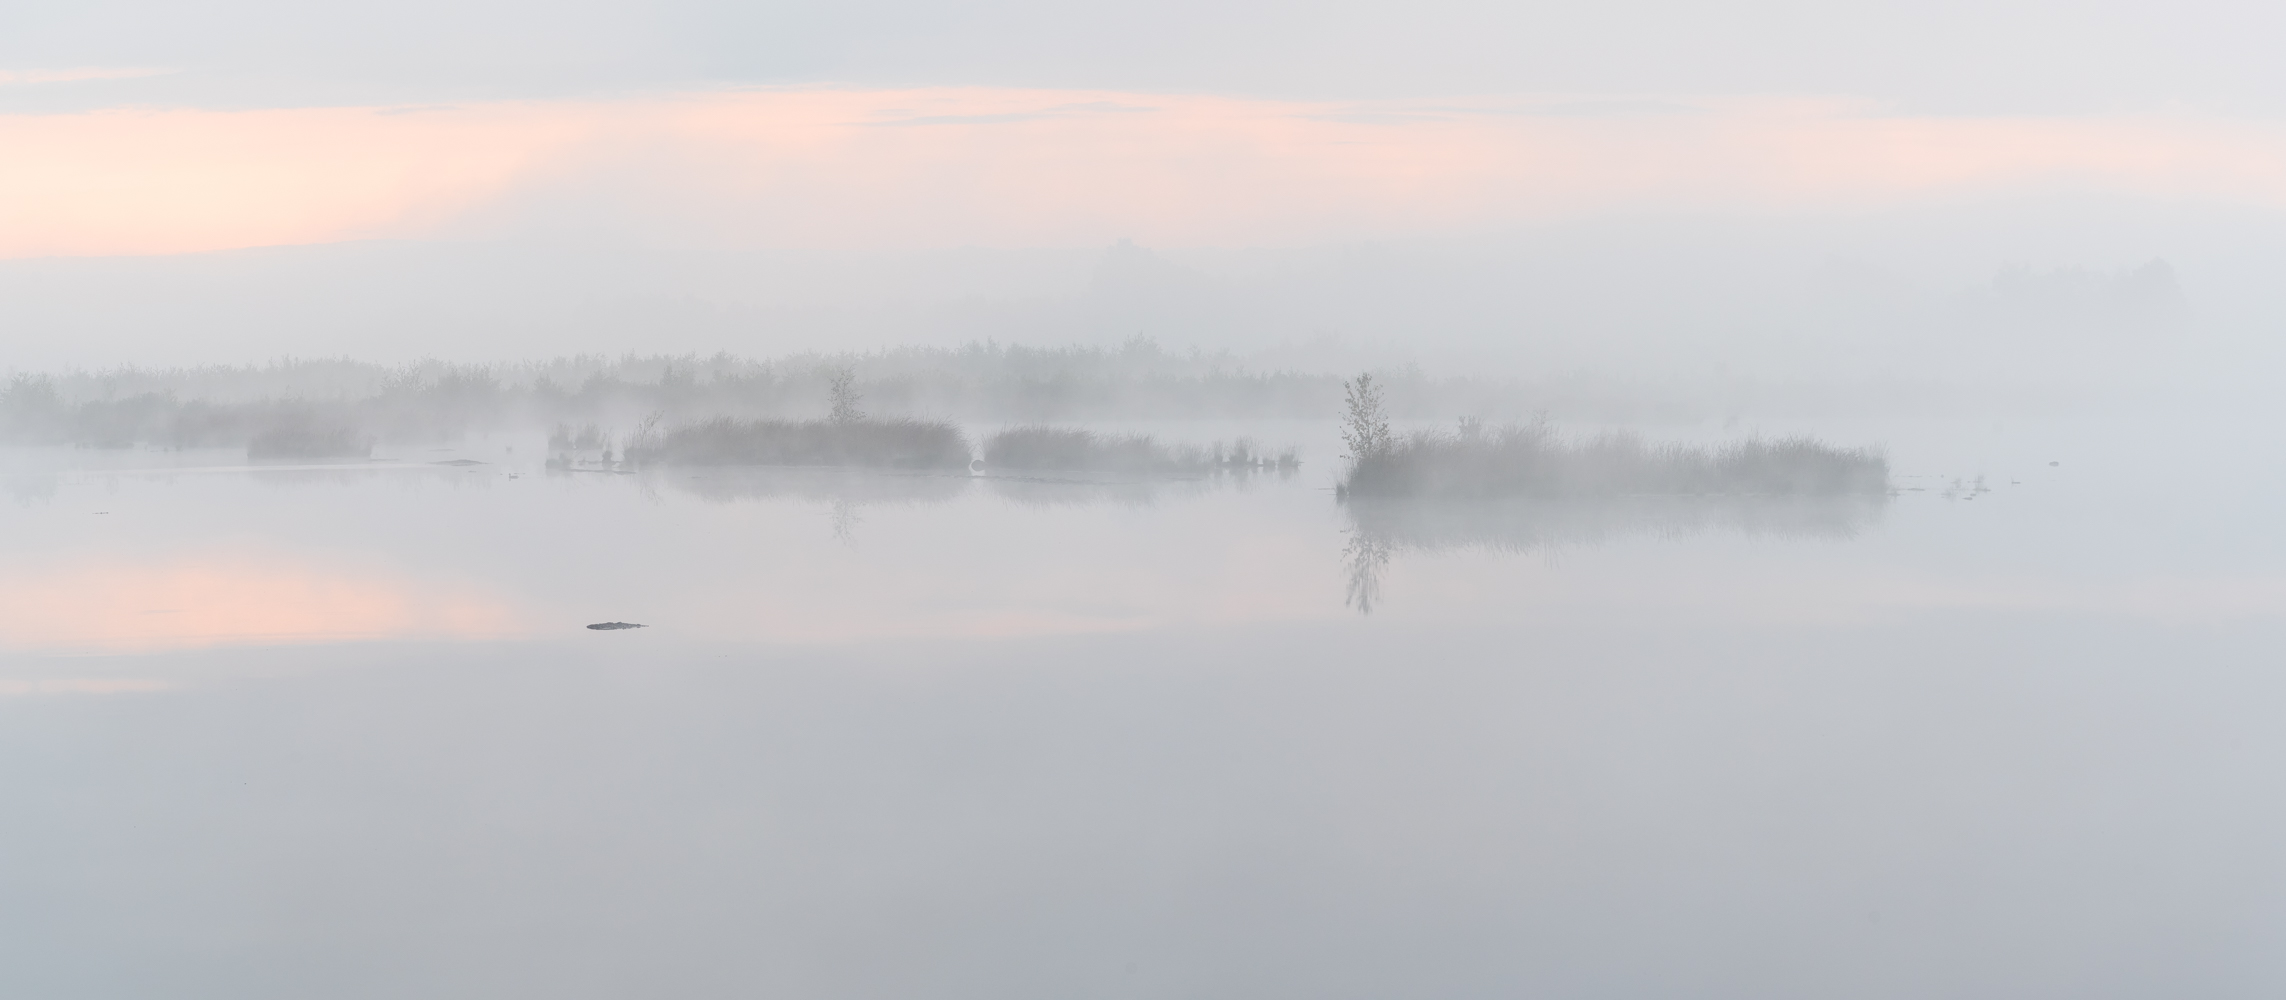 __foggy morning__